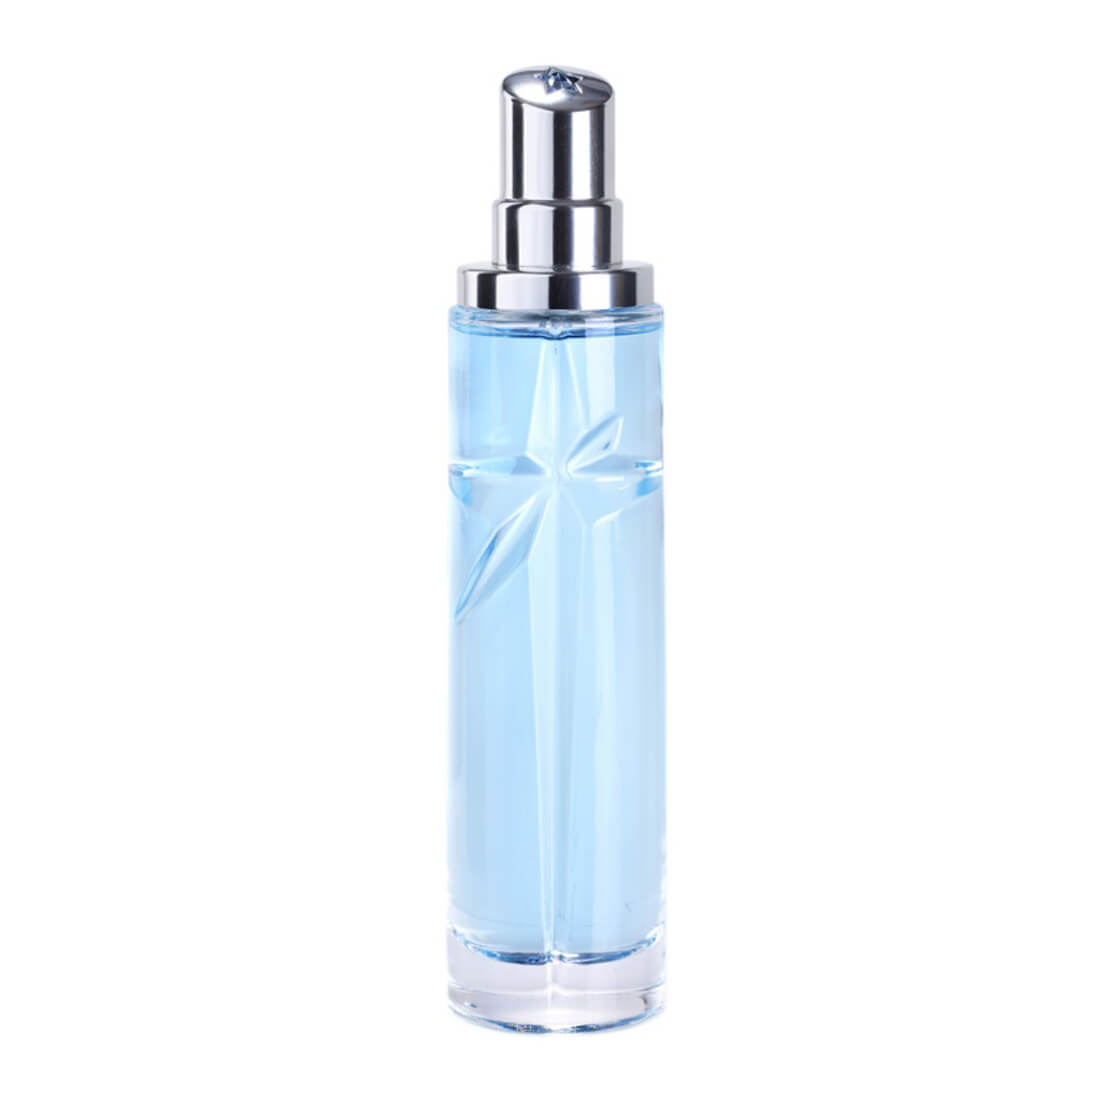 Thierry Mugler Innocent Eau De Perfume For Women - 75ml